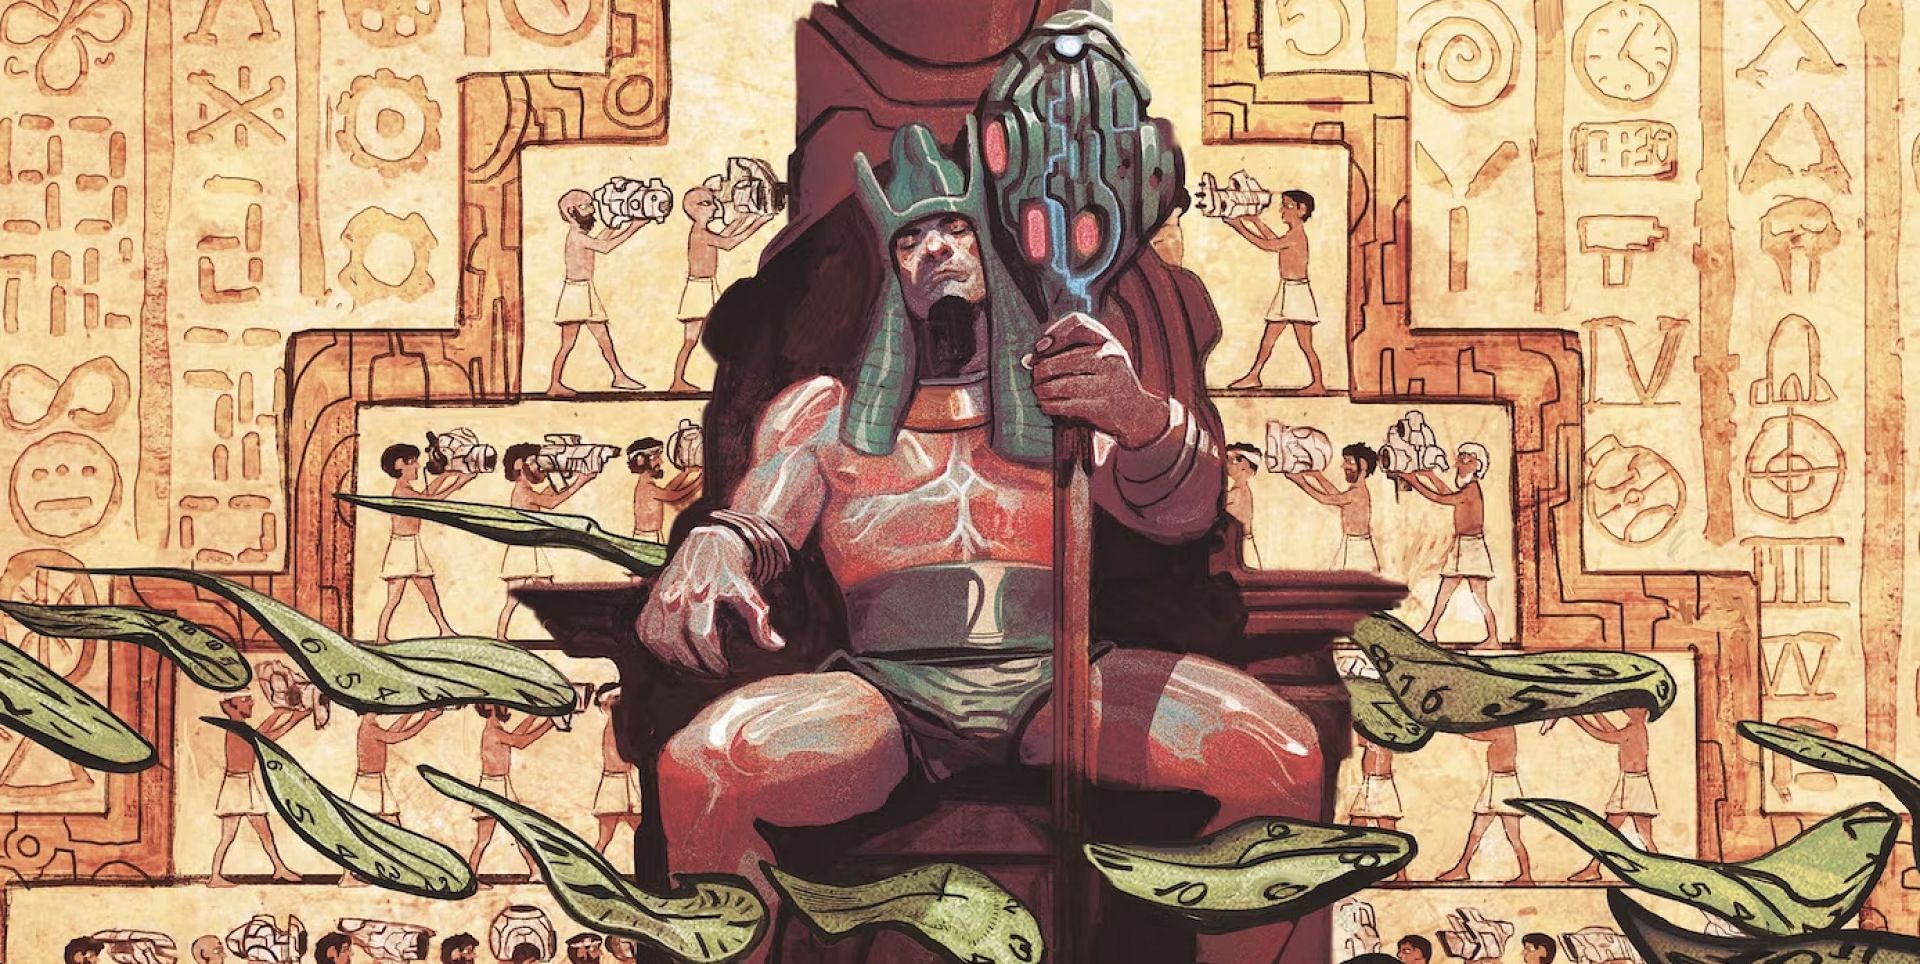 Rama-Tut: A pharaoh who traveled back in time (Image via Marvel Comics)